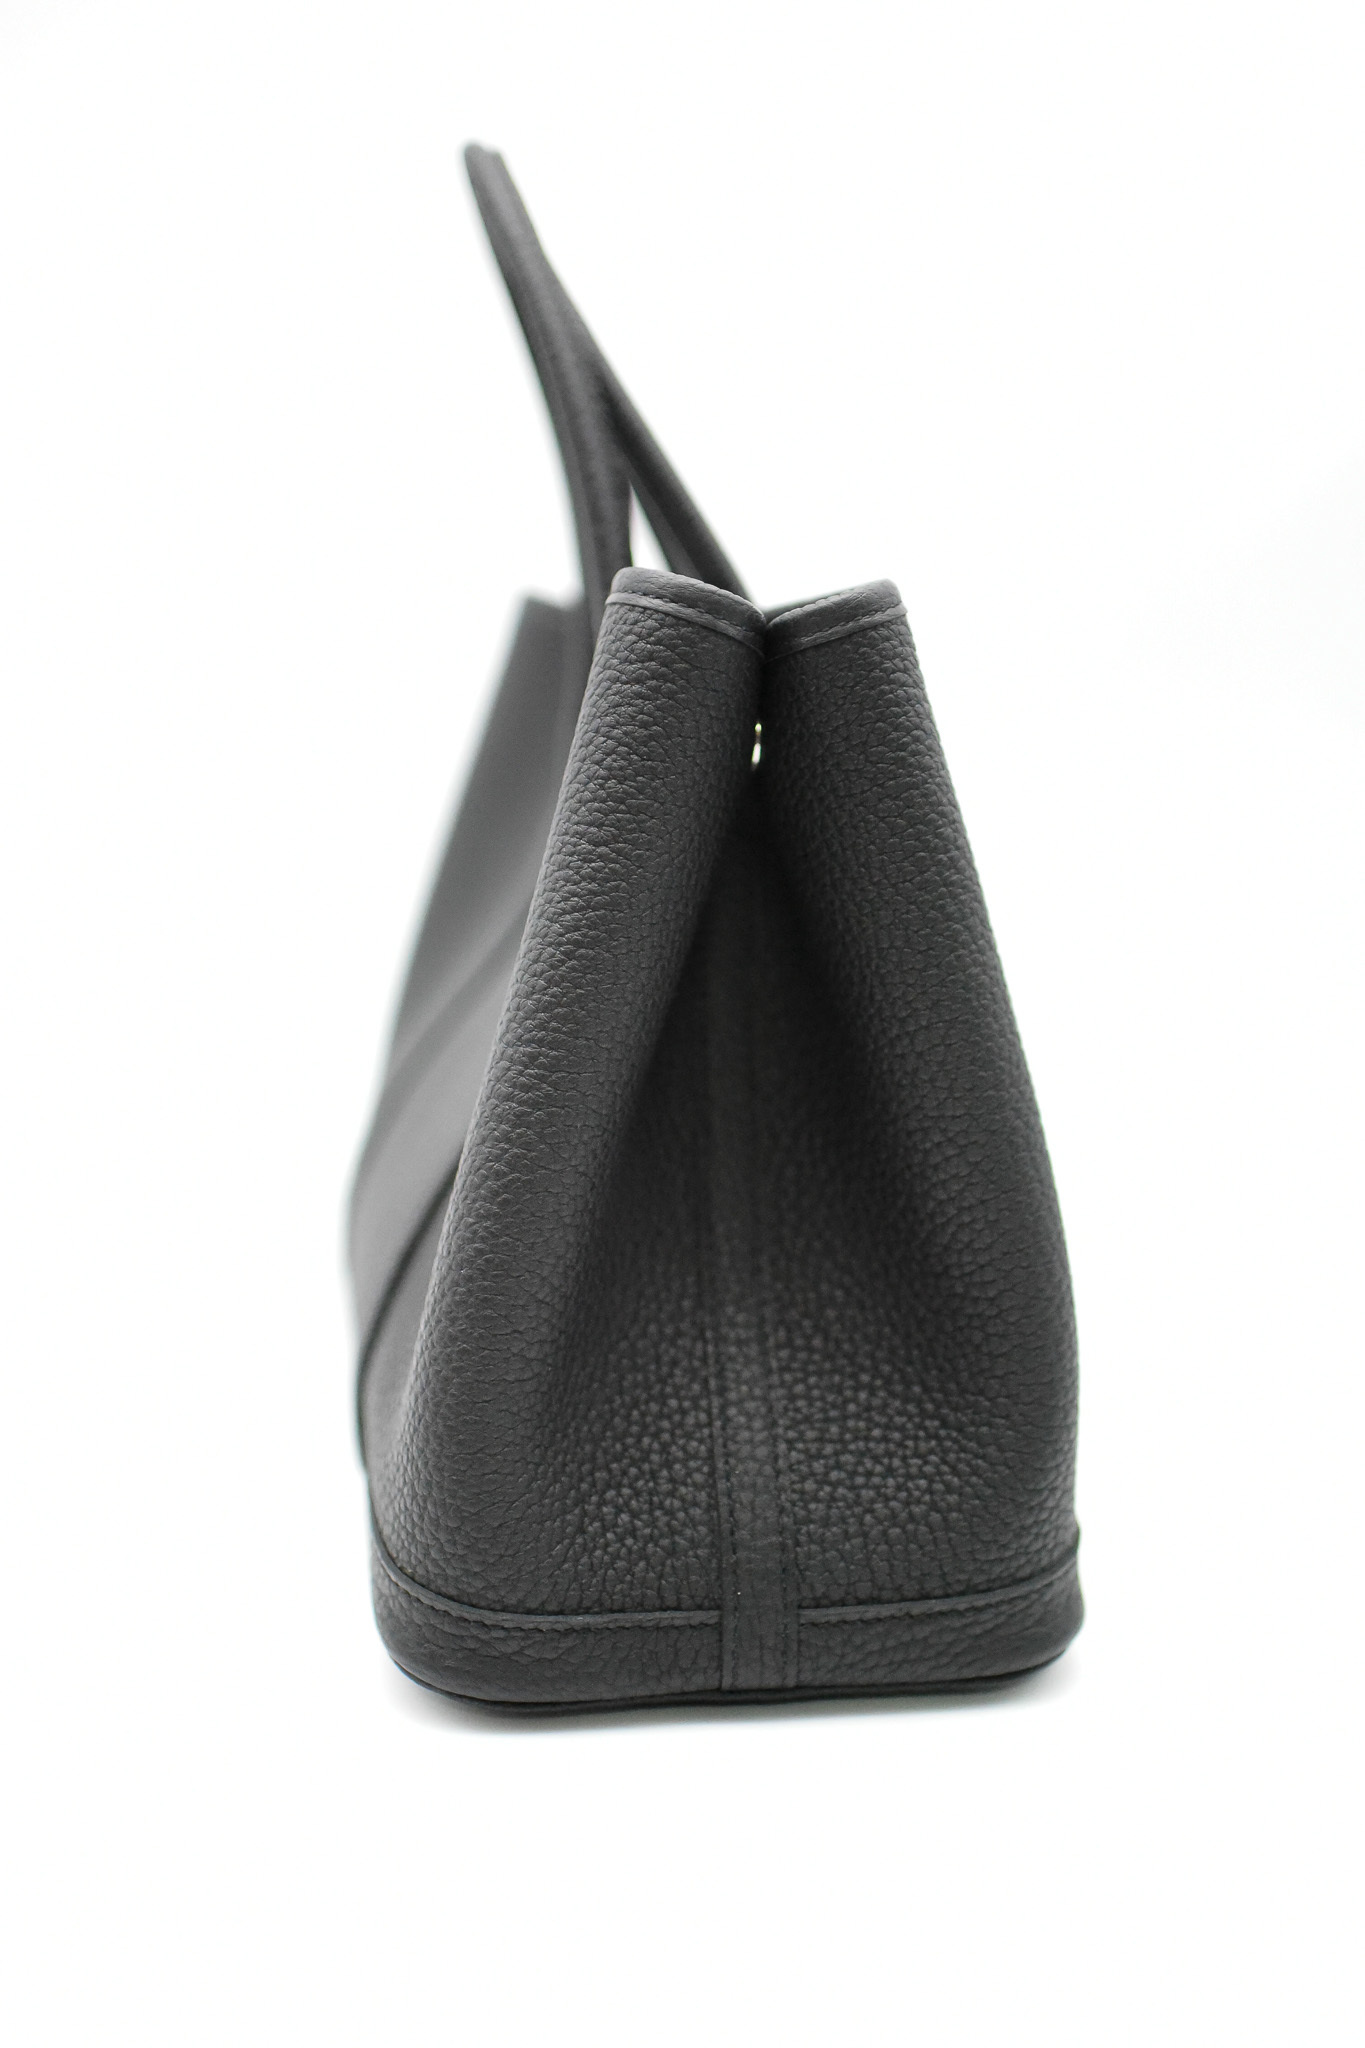 Hermes Garden Party 30 Black Negonda Palladium Hardware – Madison Avenue  Couture